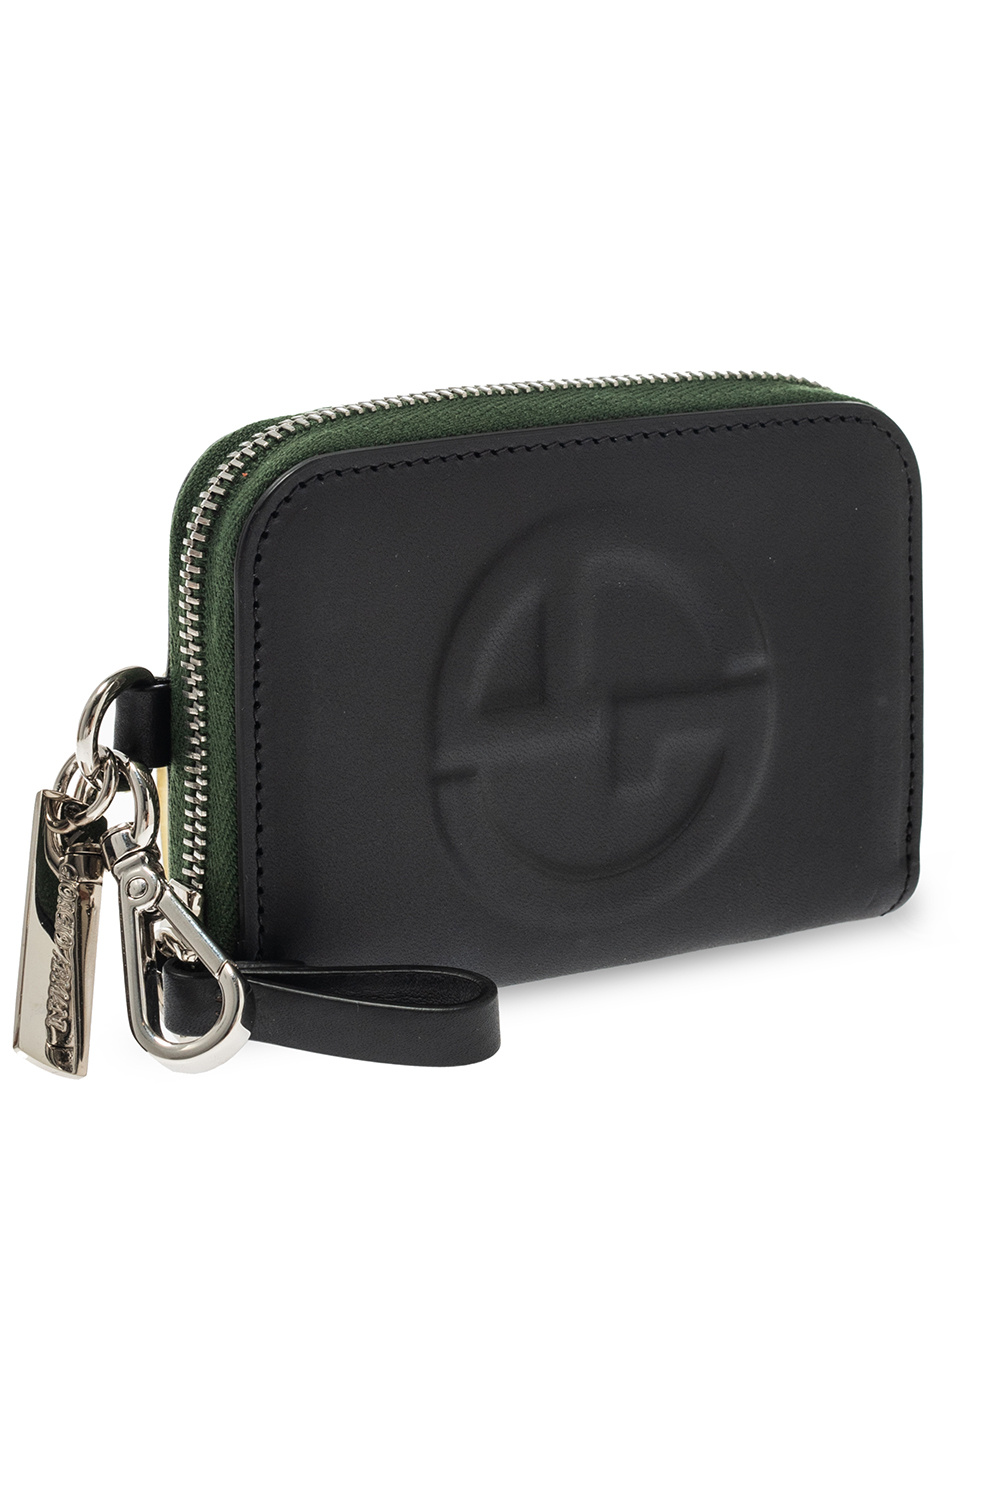 Giorgio armani holdall Wallet with logo